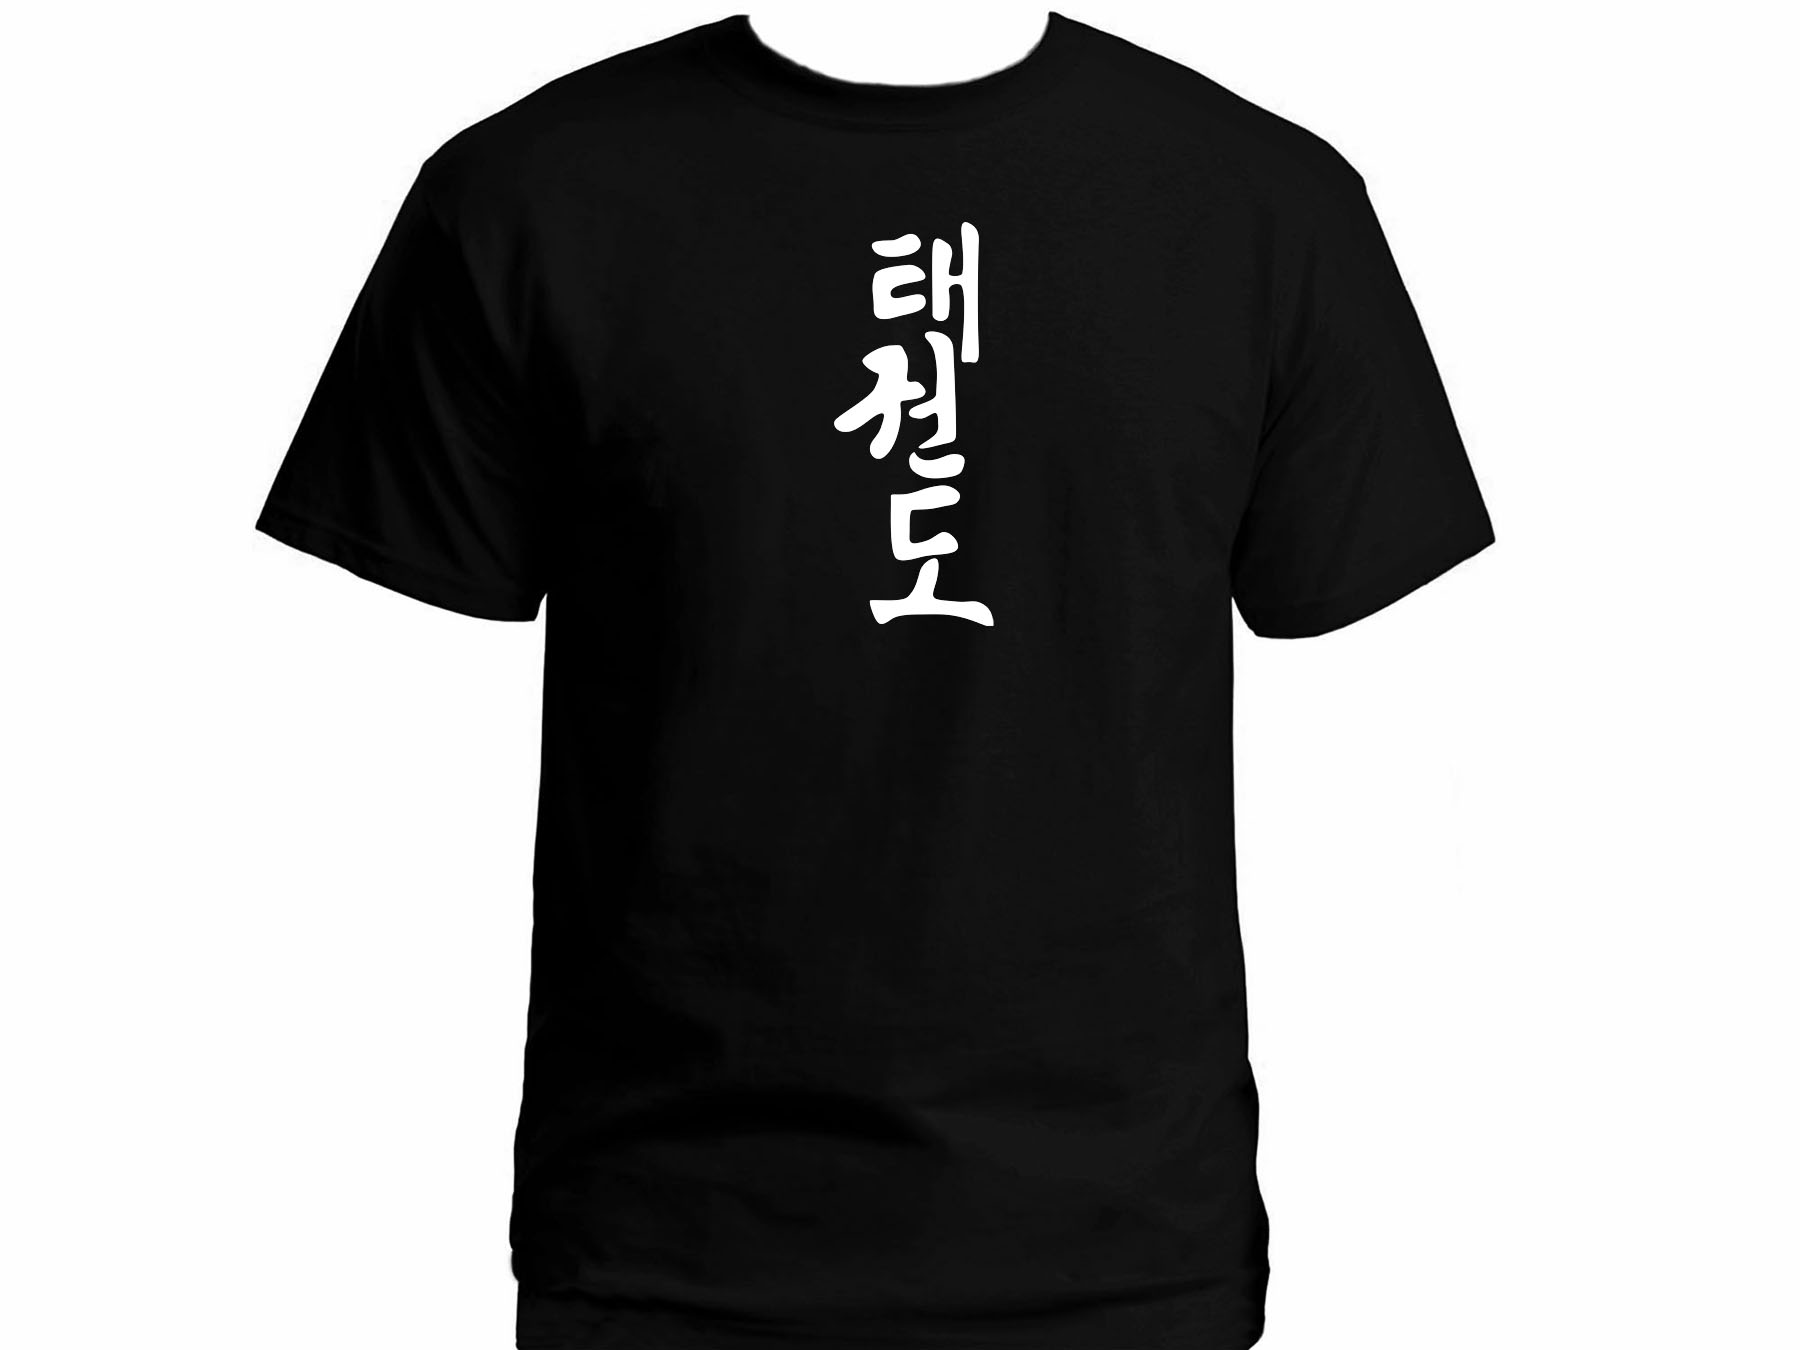 Taekwondo Tae kwondo Tae kwon do MMA martial arts t-shirt